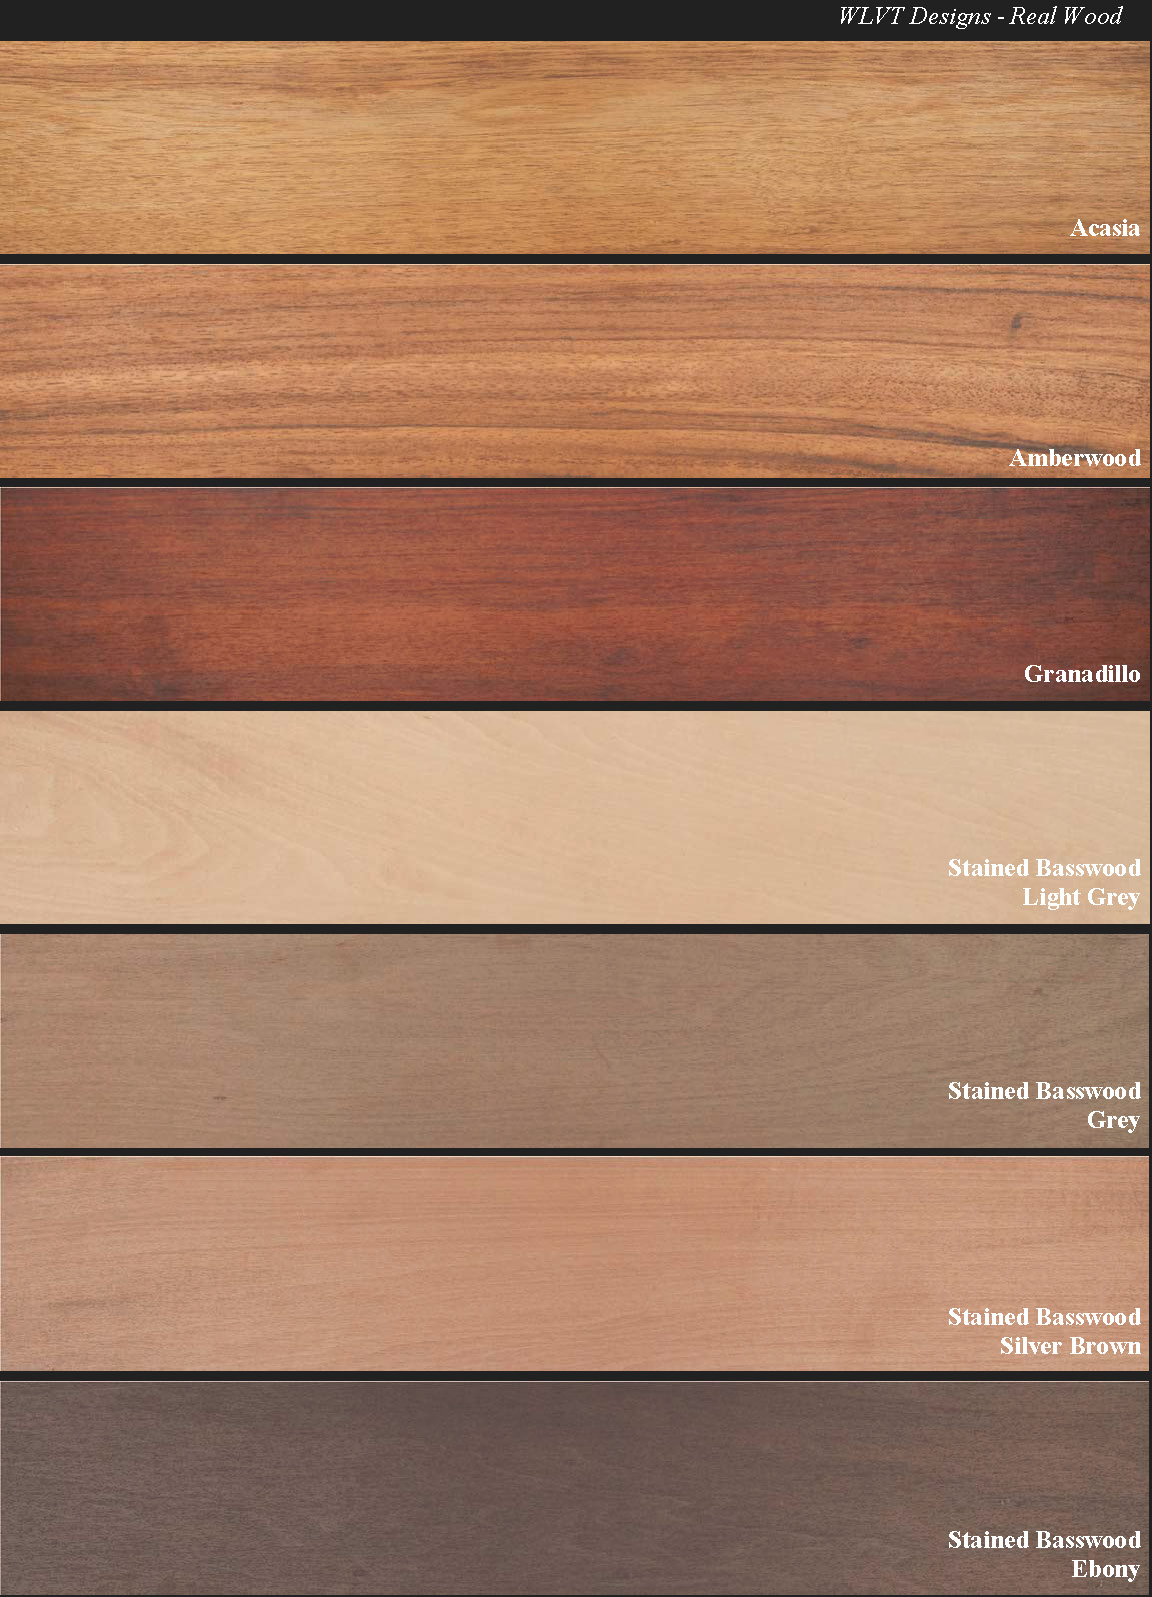 ErgoTop Designvinyl gulve Real Wood designs - Vinylplanker, vinylfliser, designgulve, designvinyl, vinylgulve